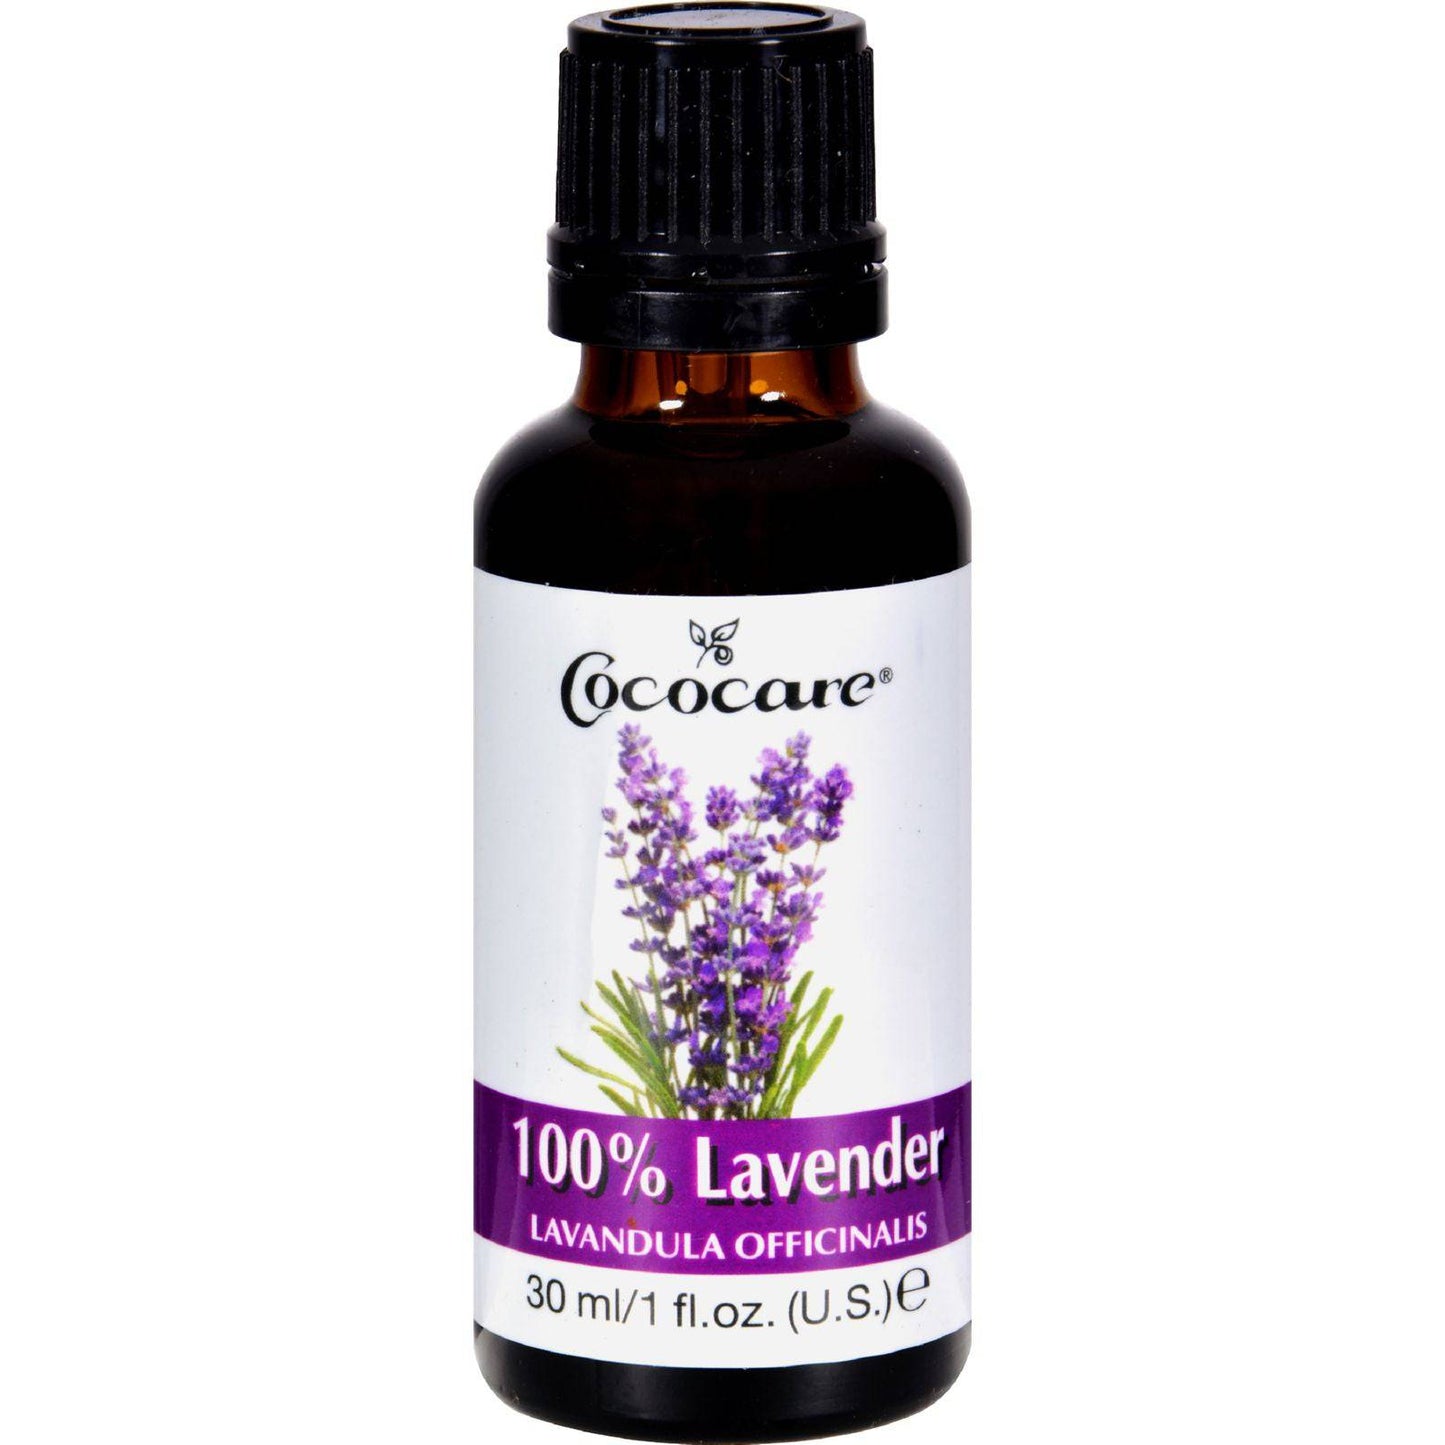 Buy Cococare Lavender Oil - 100 Percent Natural - 1 Fl Oz  at OnlyNaturals.us